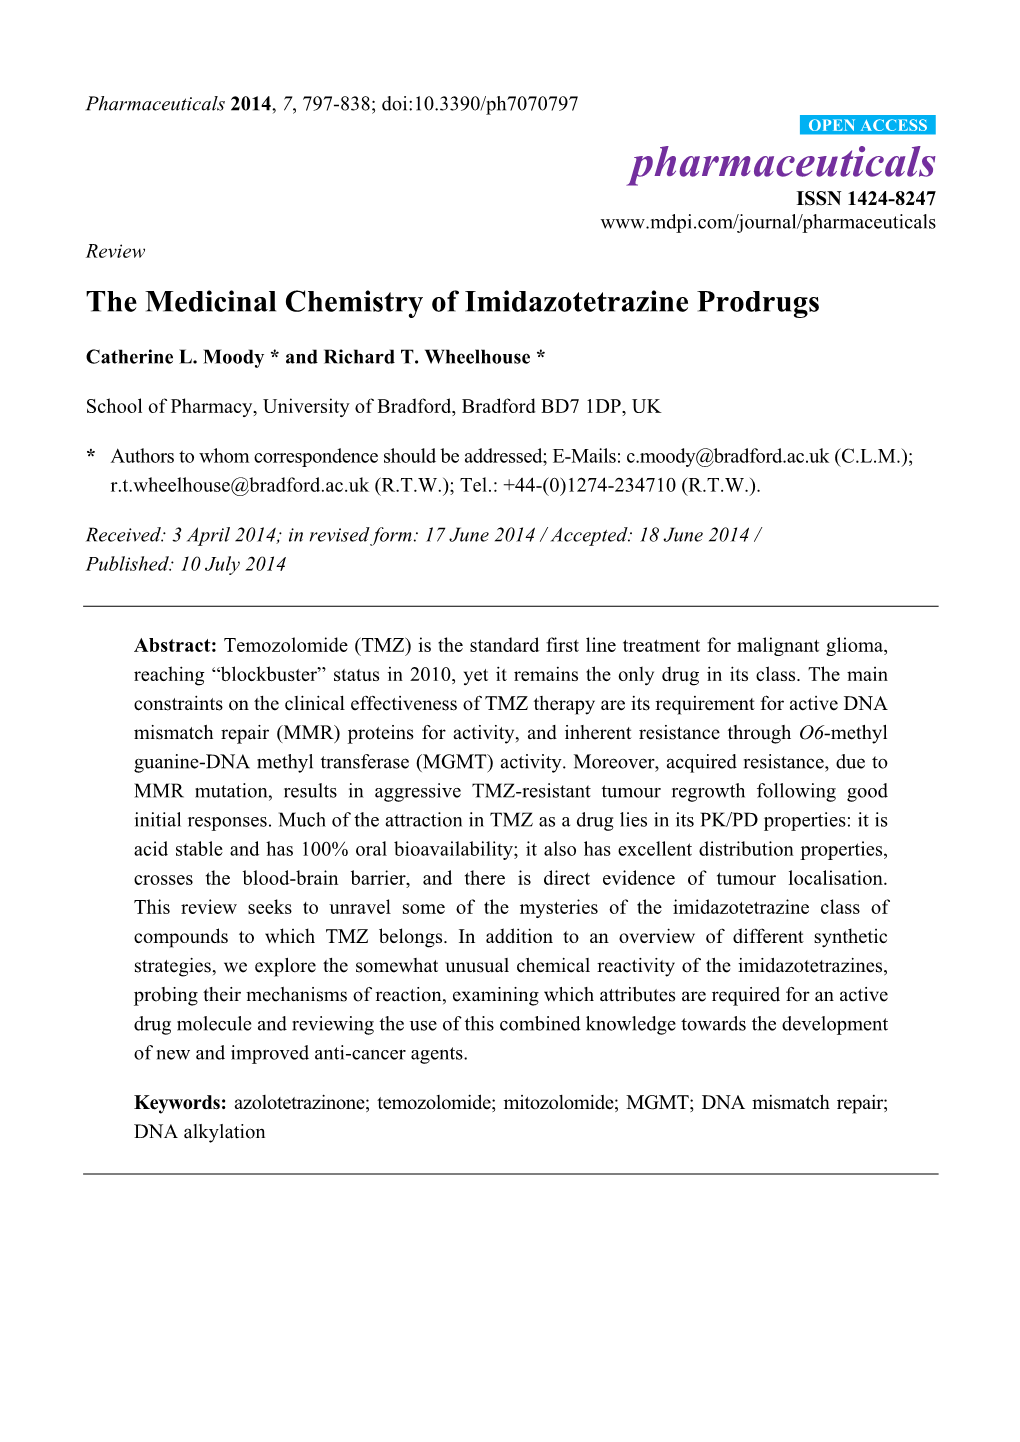 The Medicinal Chemistry of Imidazotetrazine Prodrugs